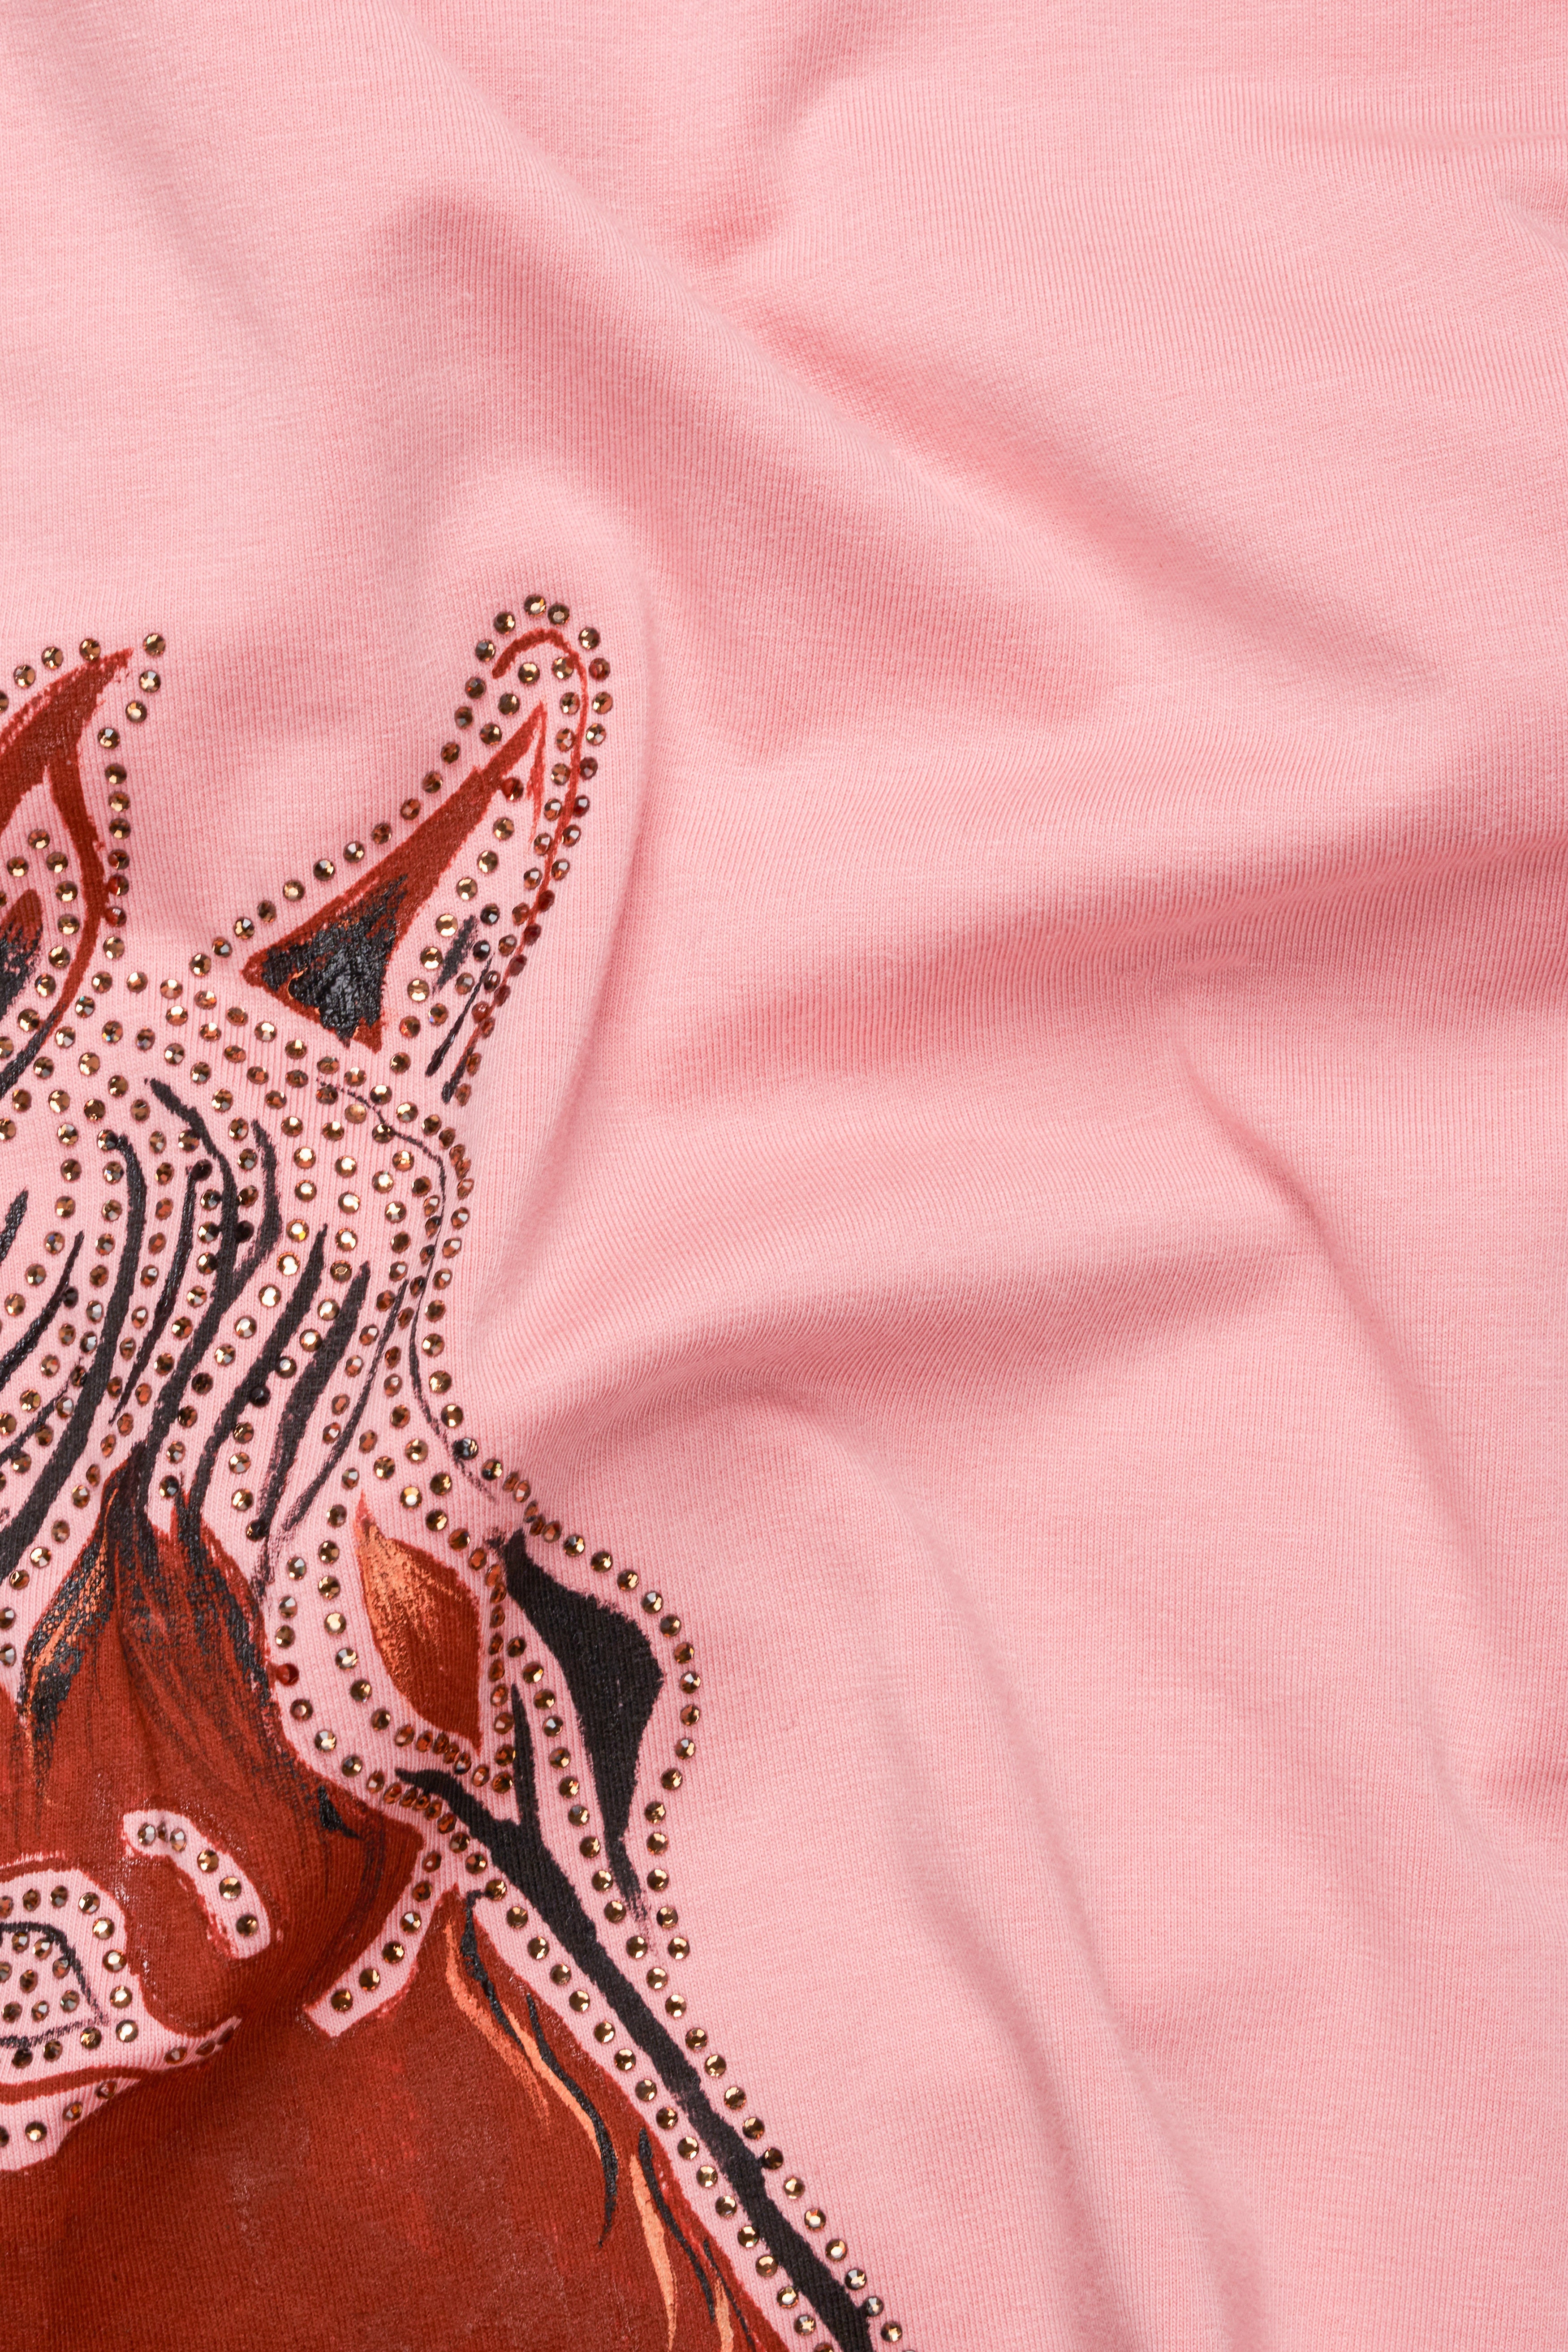 Beauty Bush Pink Funky Horse Hand Painted with Stonwork Organic Cotton T-Shirt TS007-W05-ART-S, TS007-W05-ART-M, TS007-W05-ART-L, TS007-W05-ART-XL, TS007-W05-ART-XXL